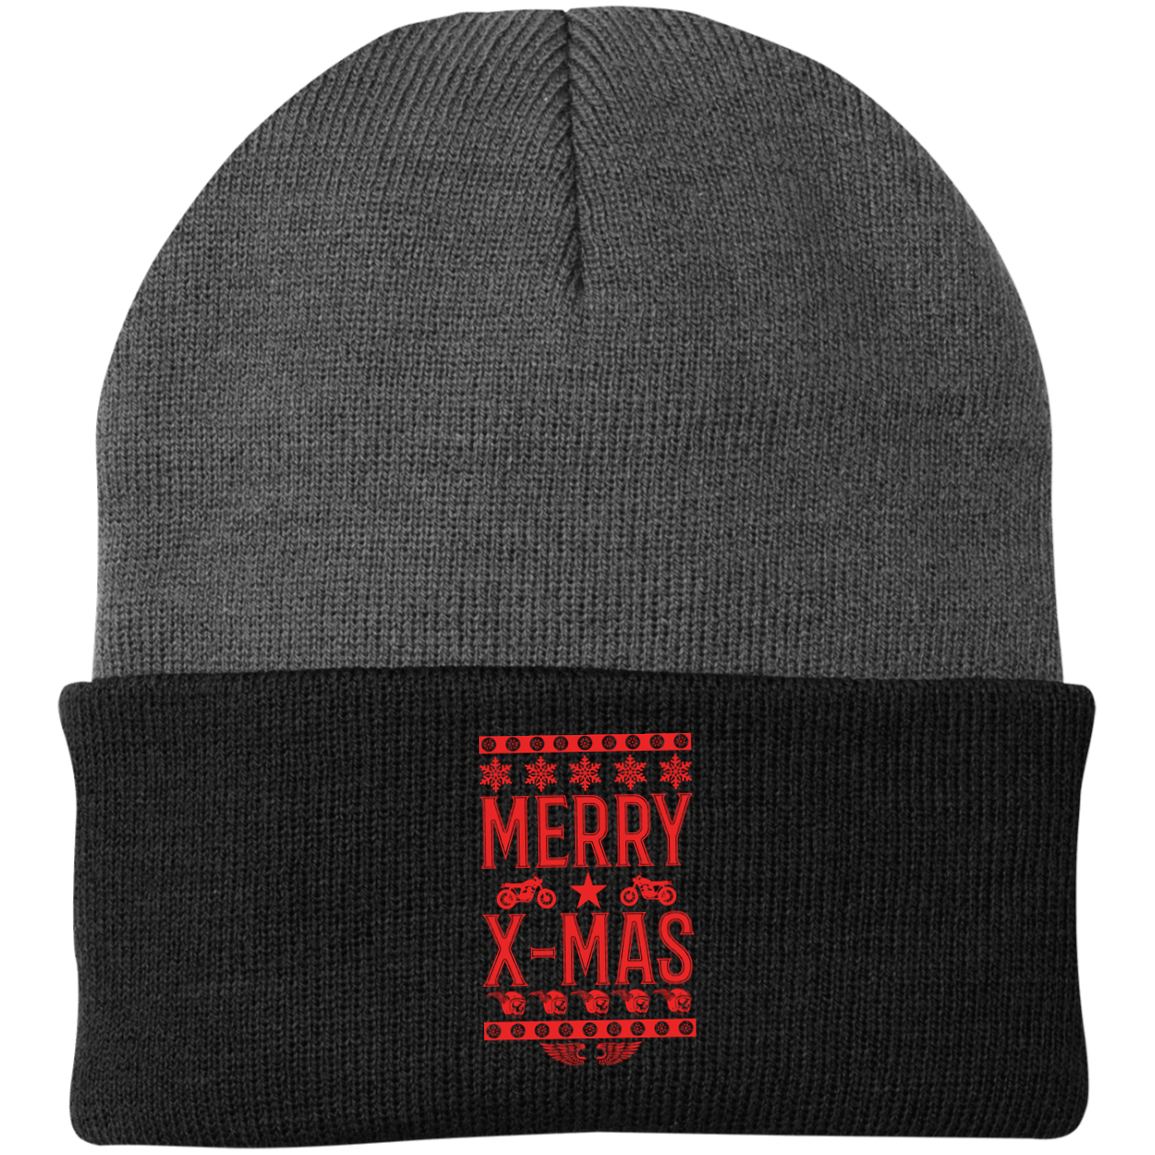 Merry X-Mas Knit Cap